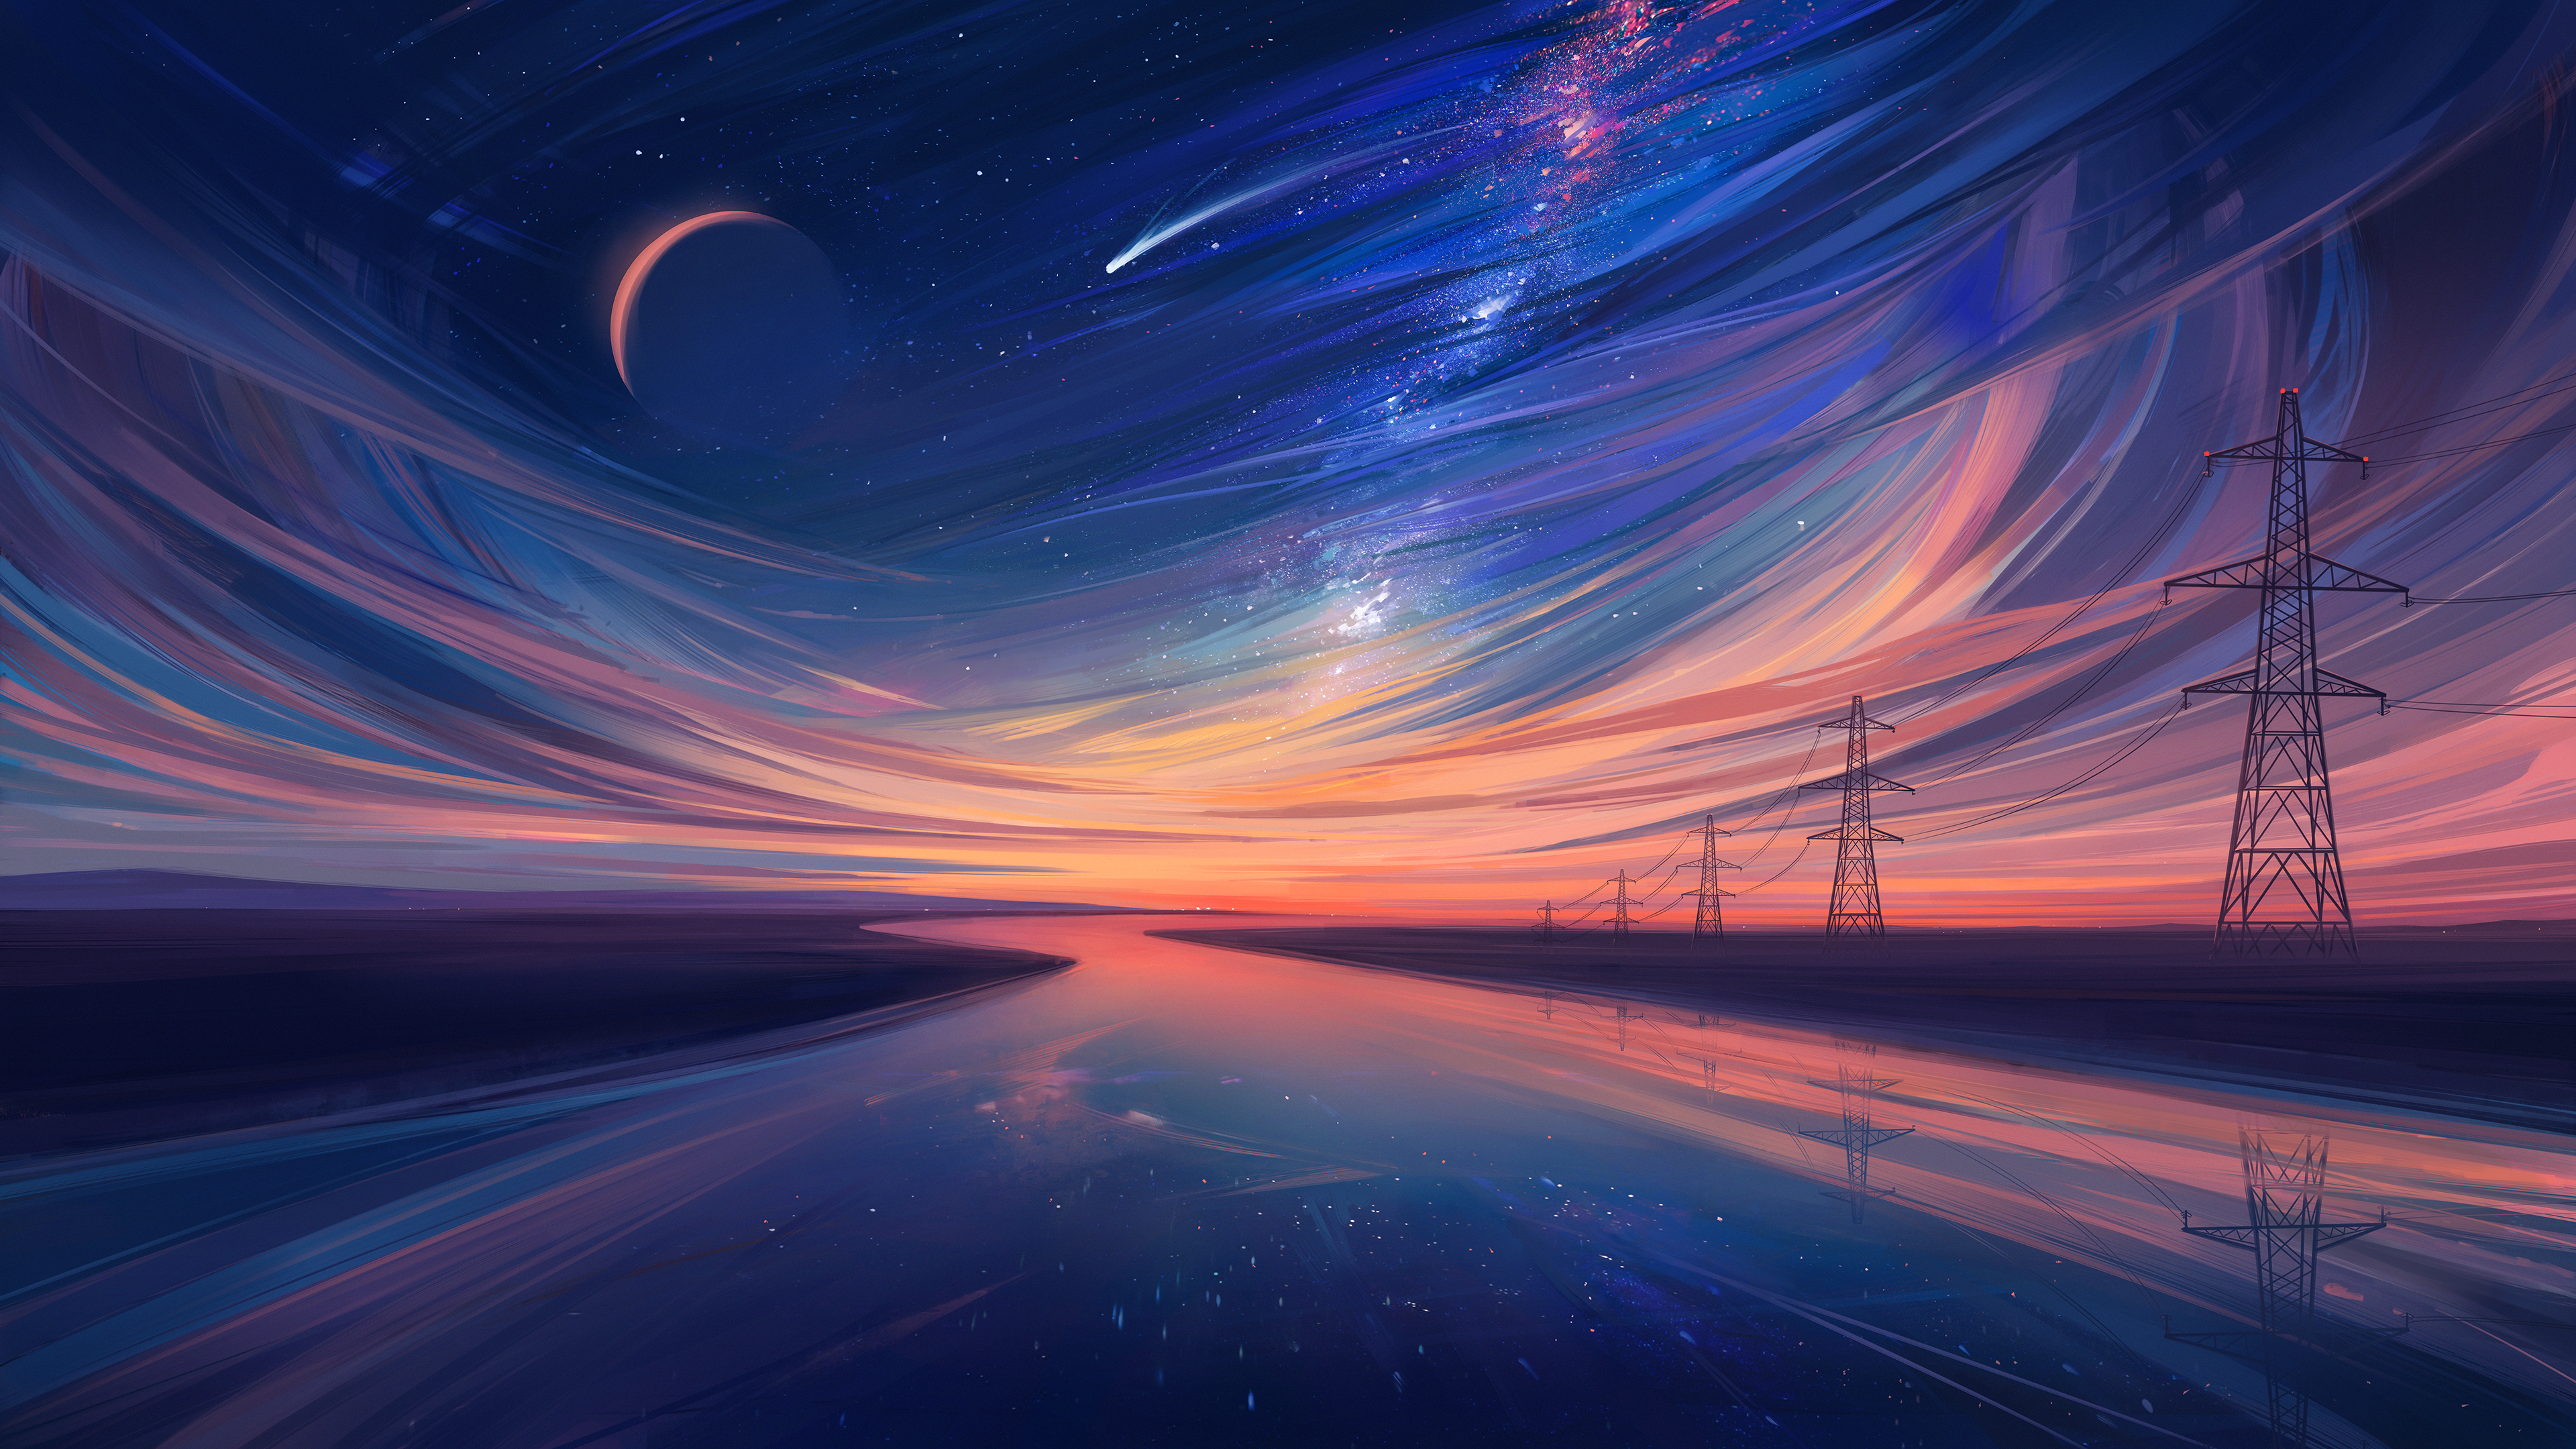 Aenami Digital Art Artwork Illustration Landscape Night Nightscape River Moon Stars 4K Sky Starry Ni 3840x2160